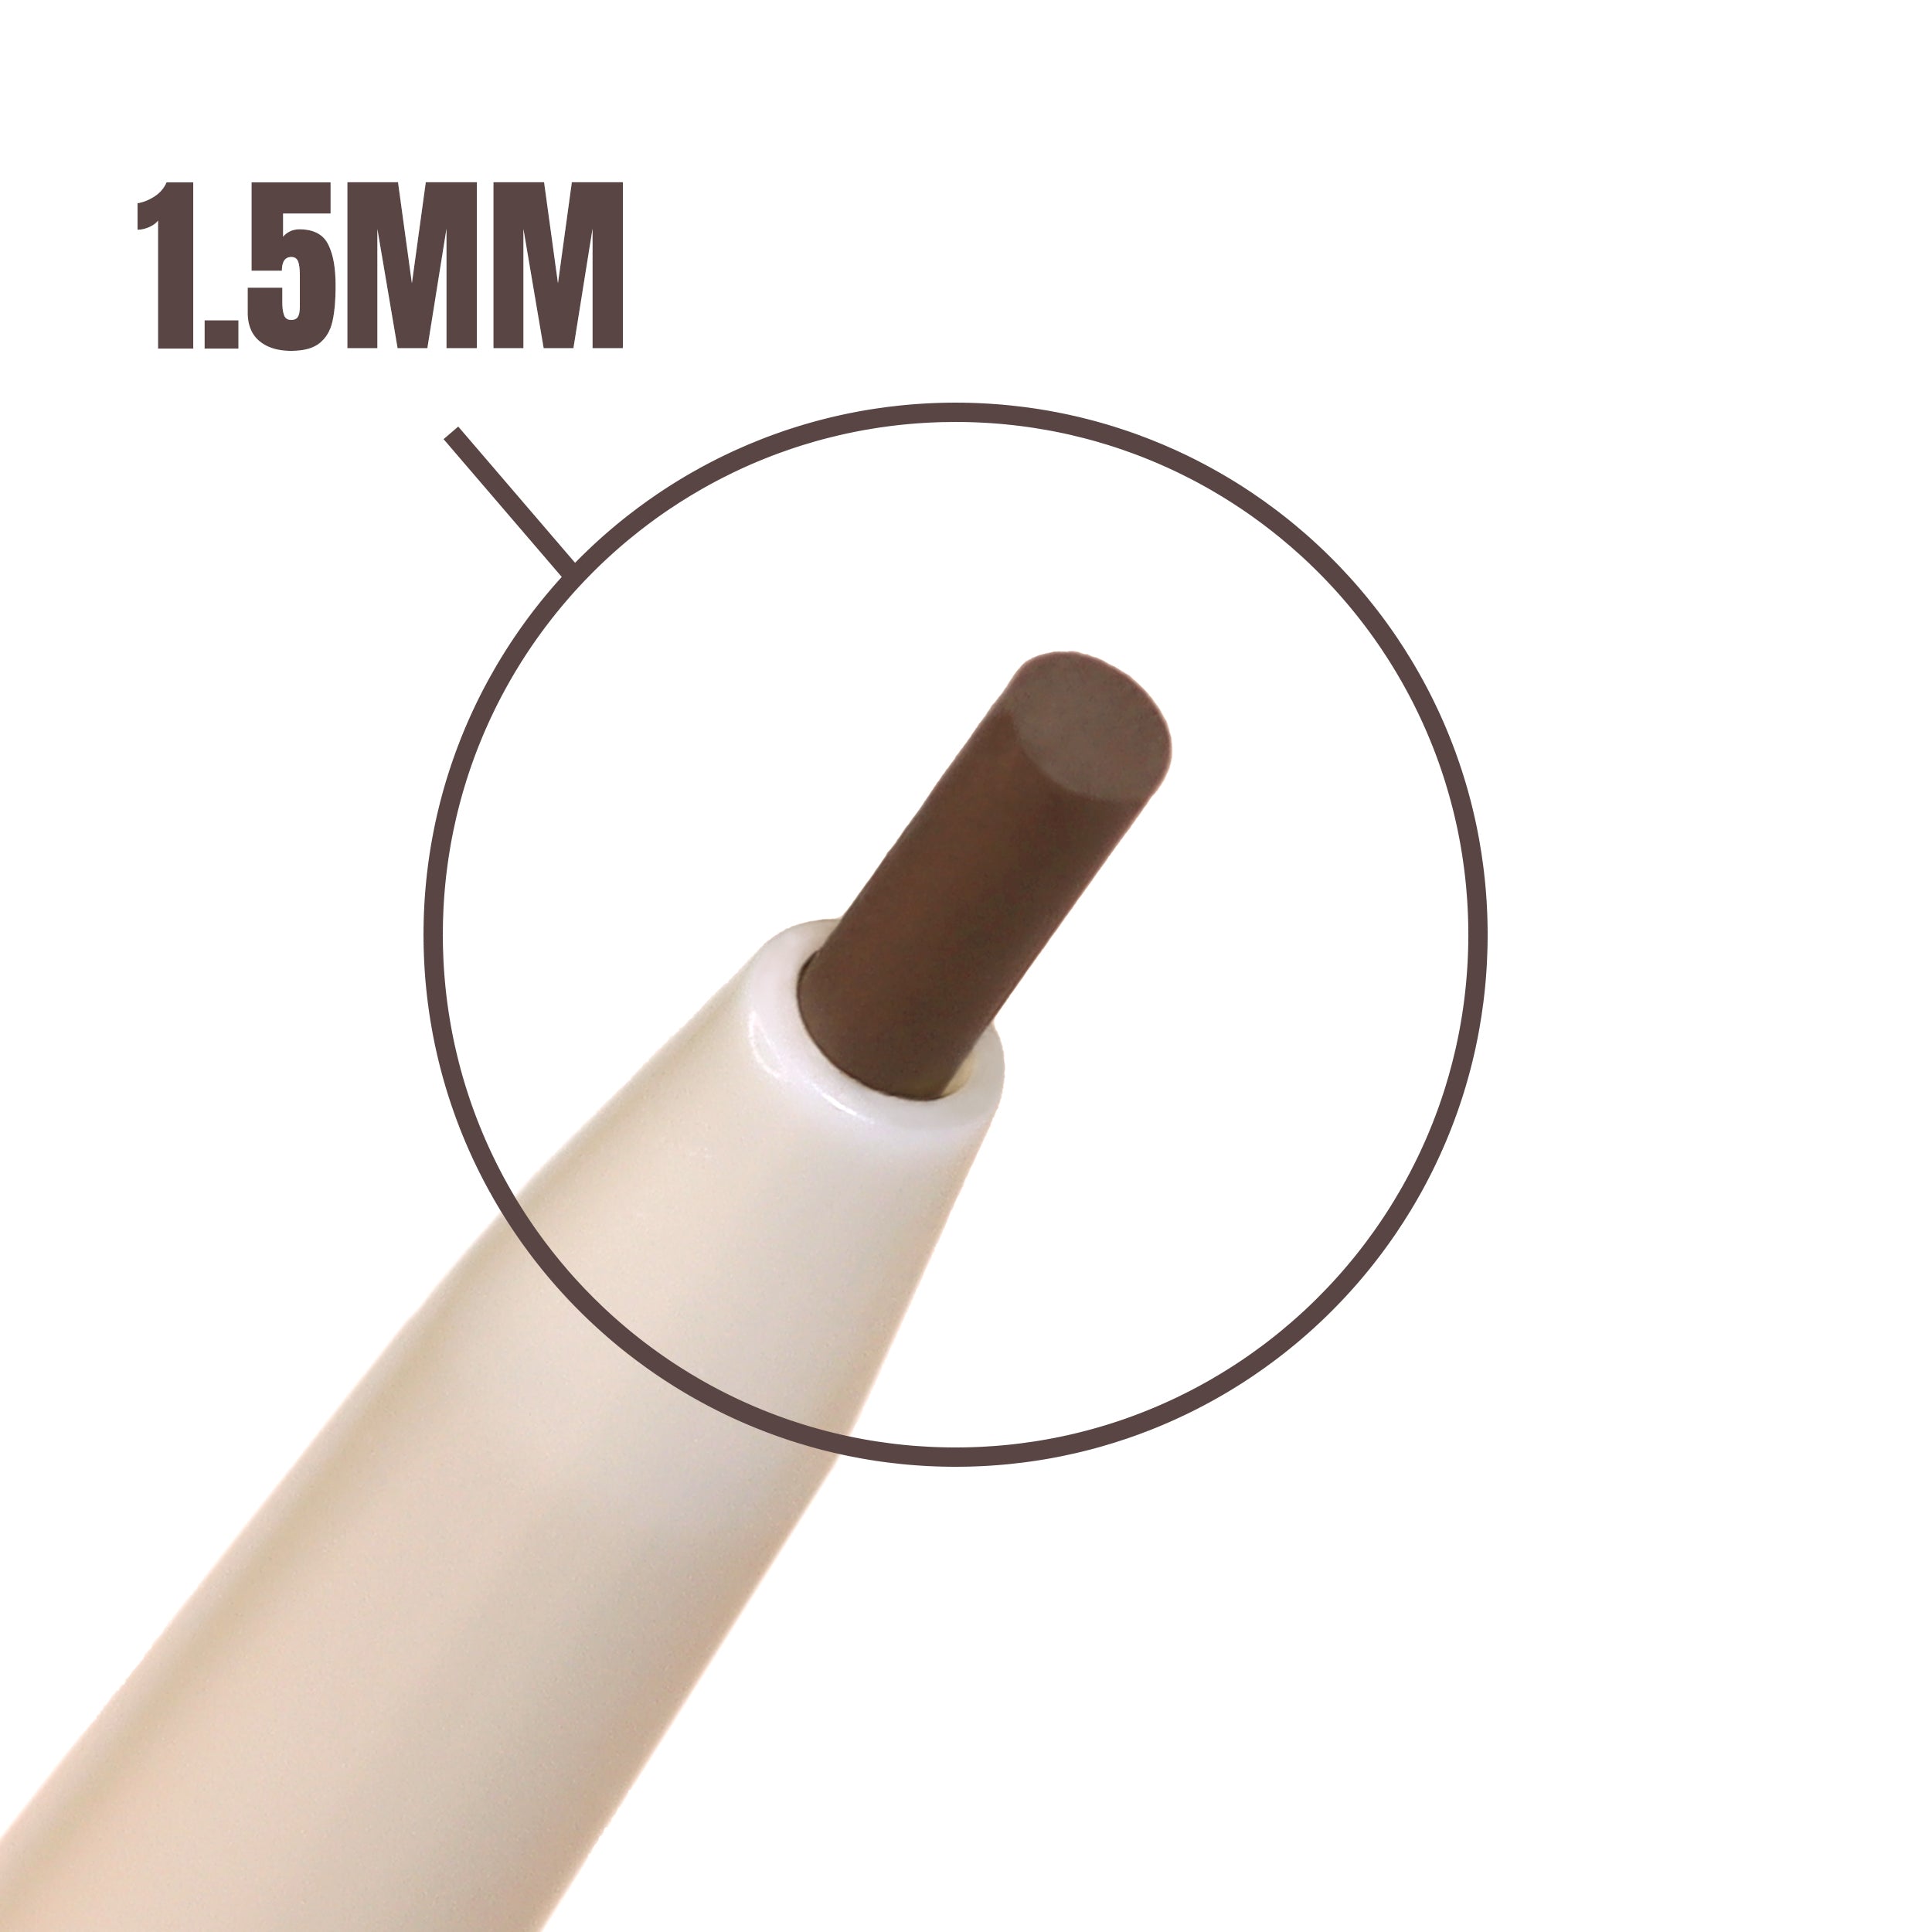 Precision Brow Pencil (005, Soft Brown)